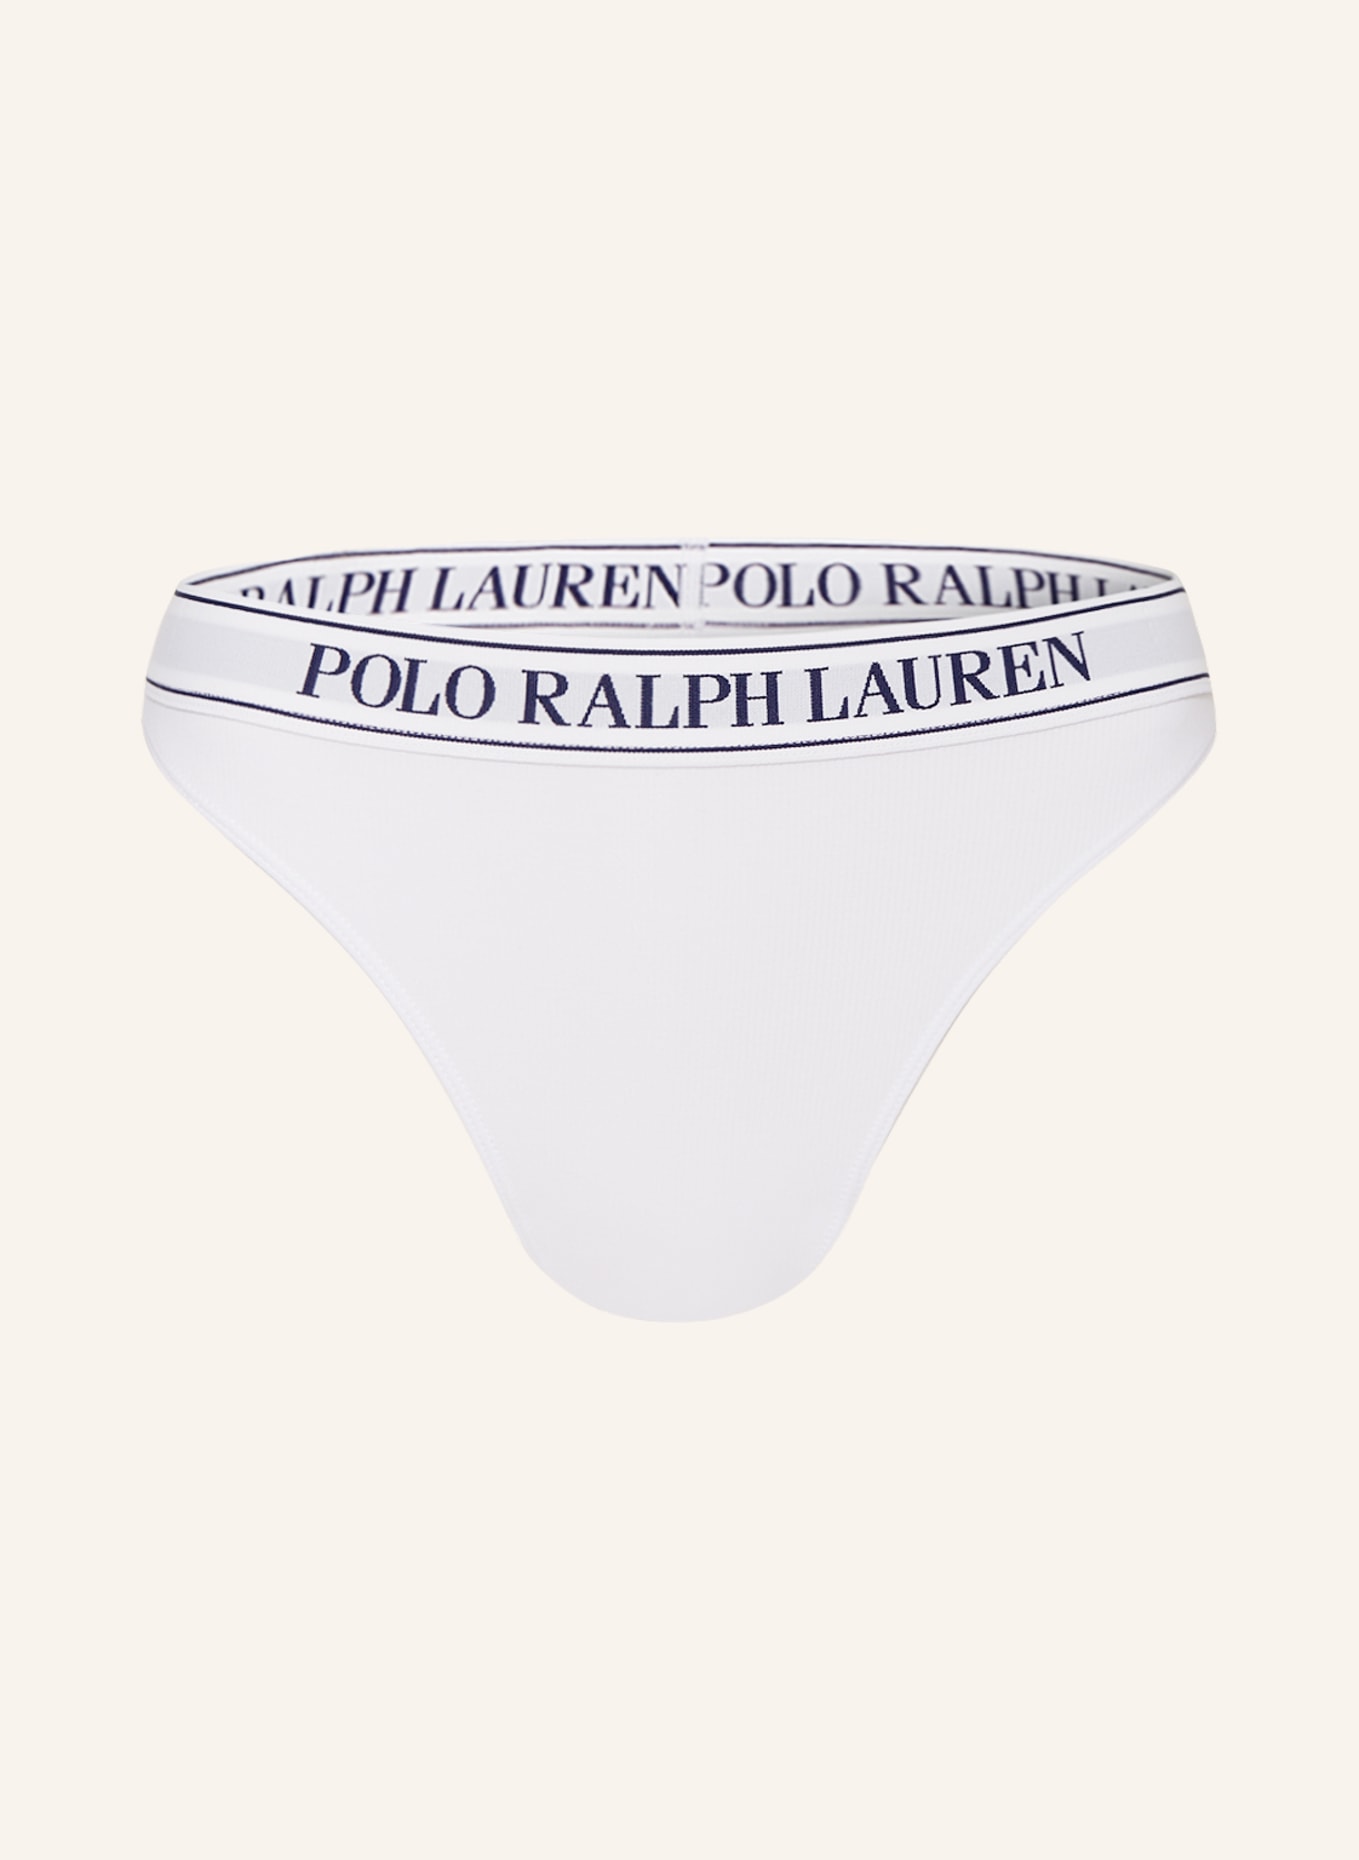 POLO RALPH LAUREN Thong in white